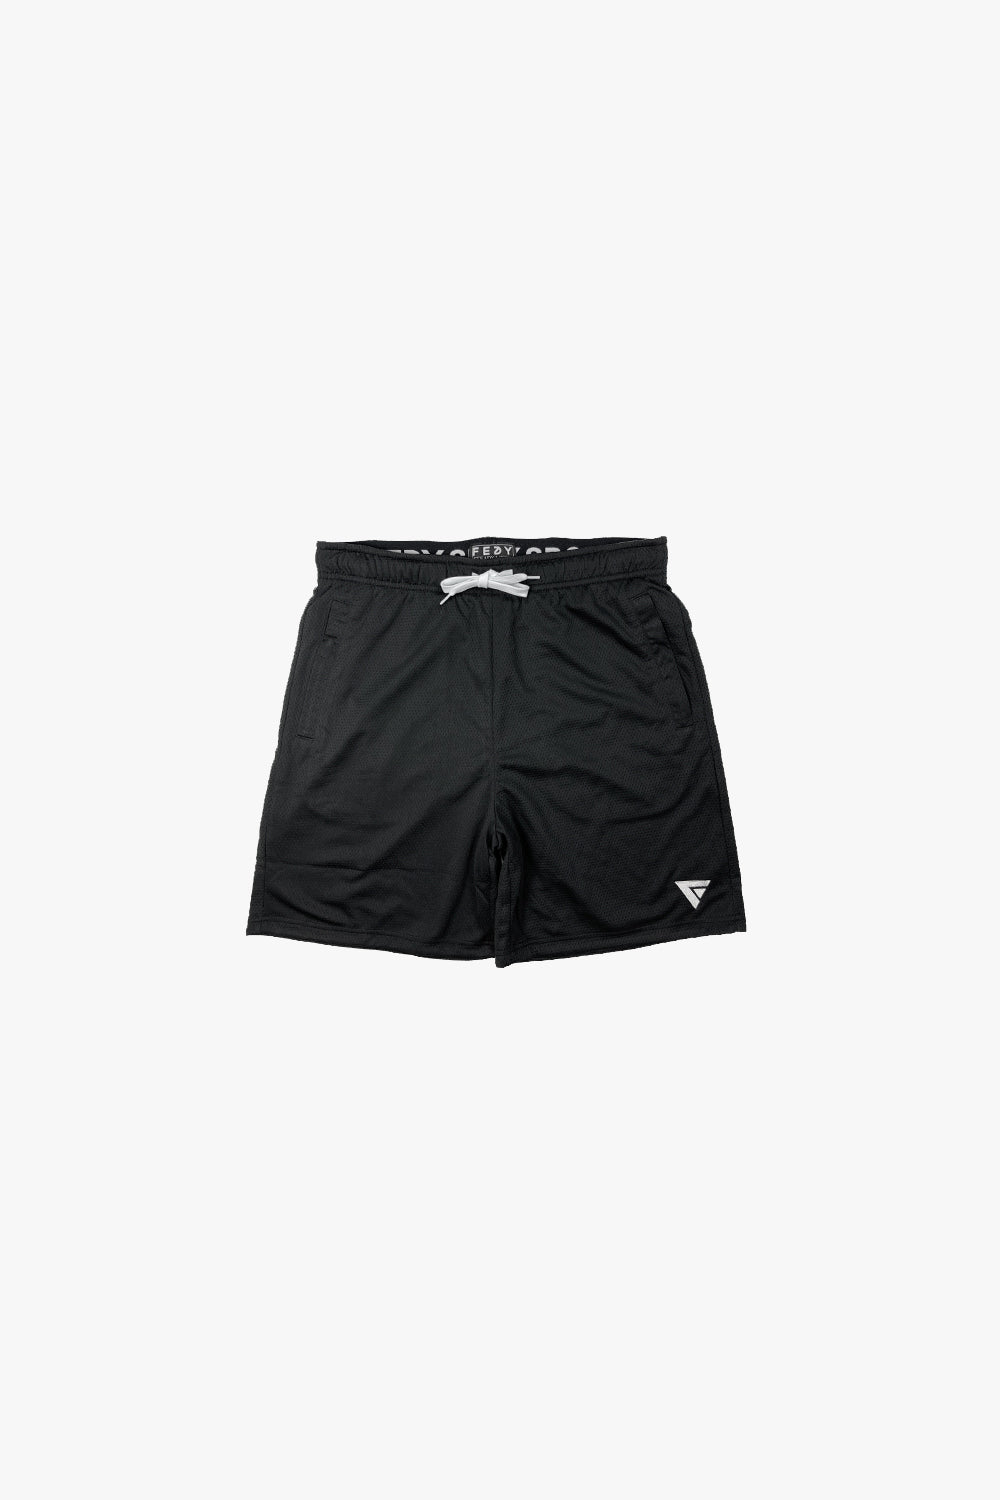 Black Minimal Mesh Basketball Shorts